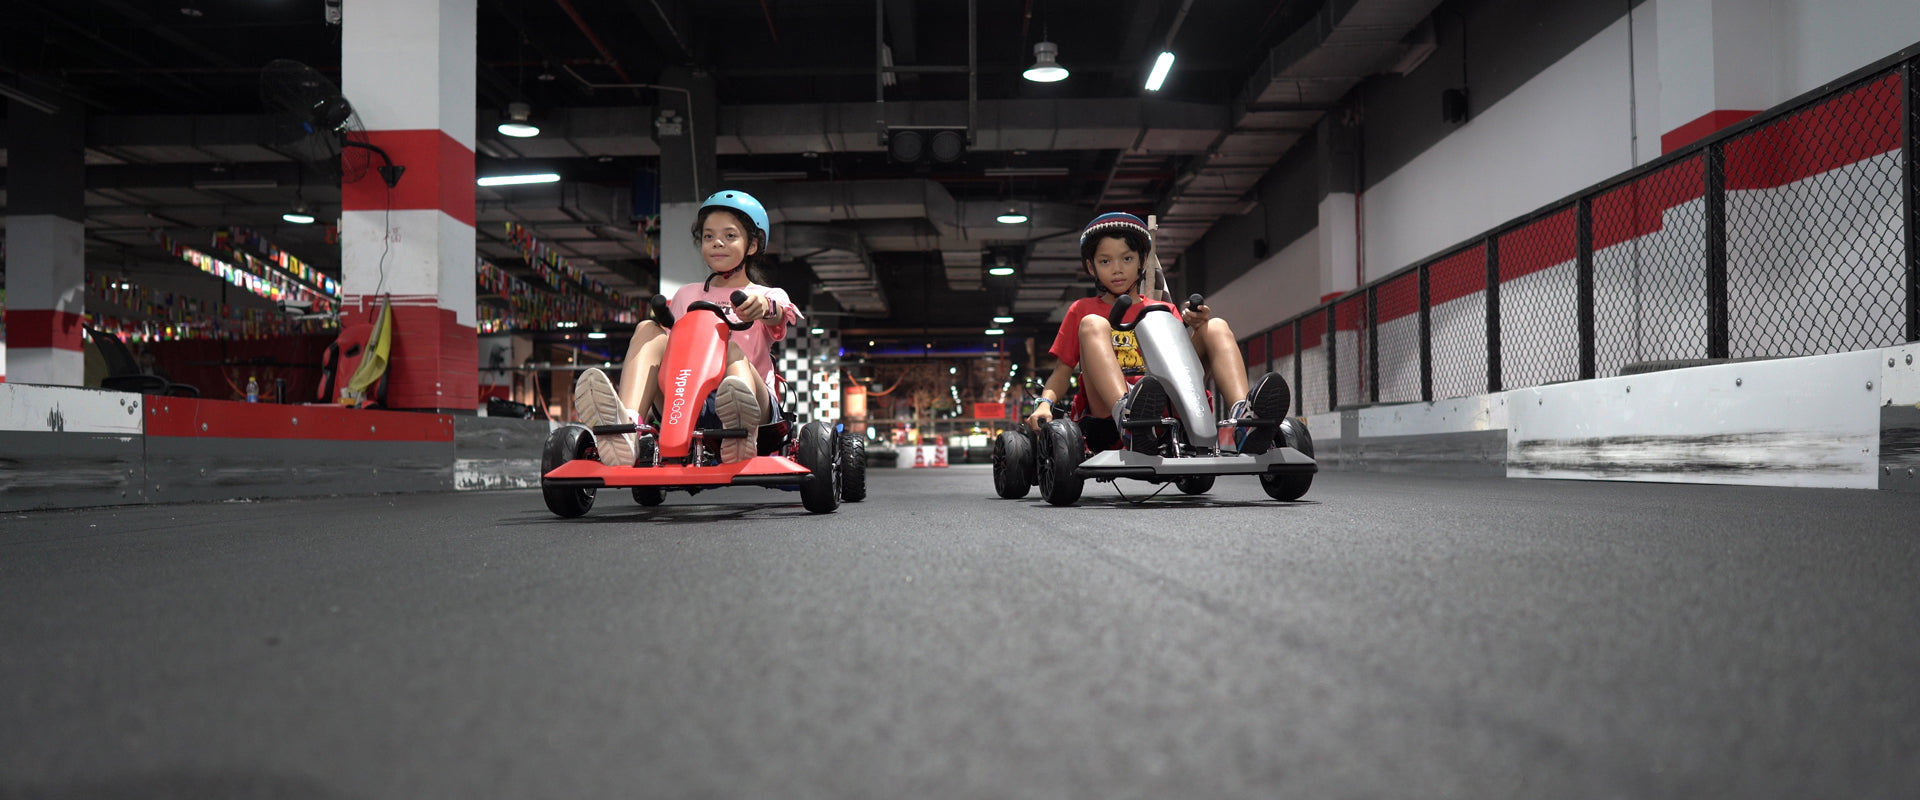 gokart-for-kids-enjoy-racing-with-friends-b